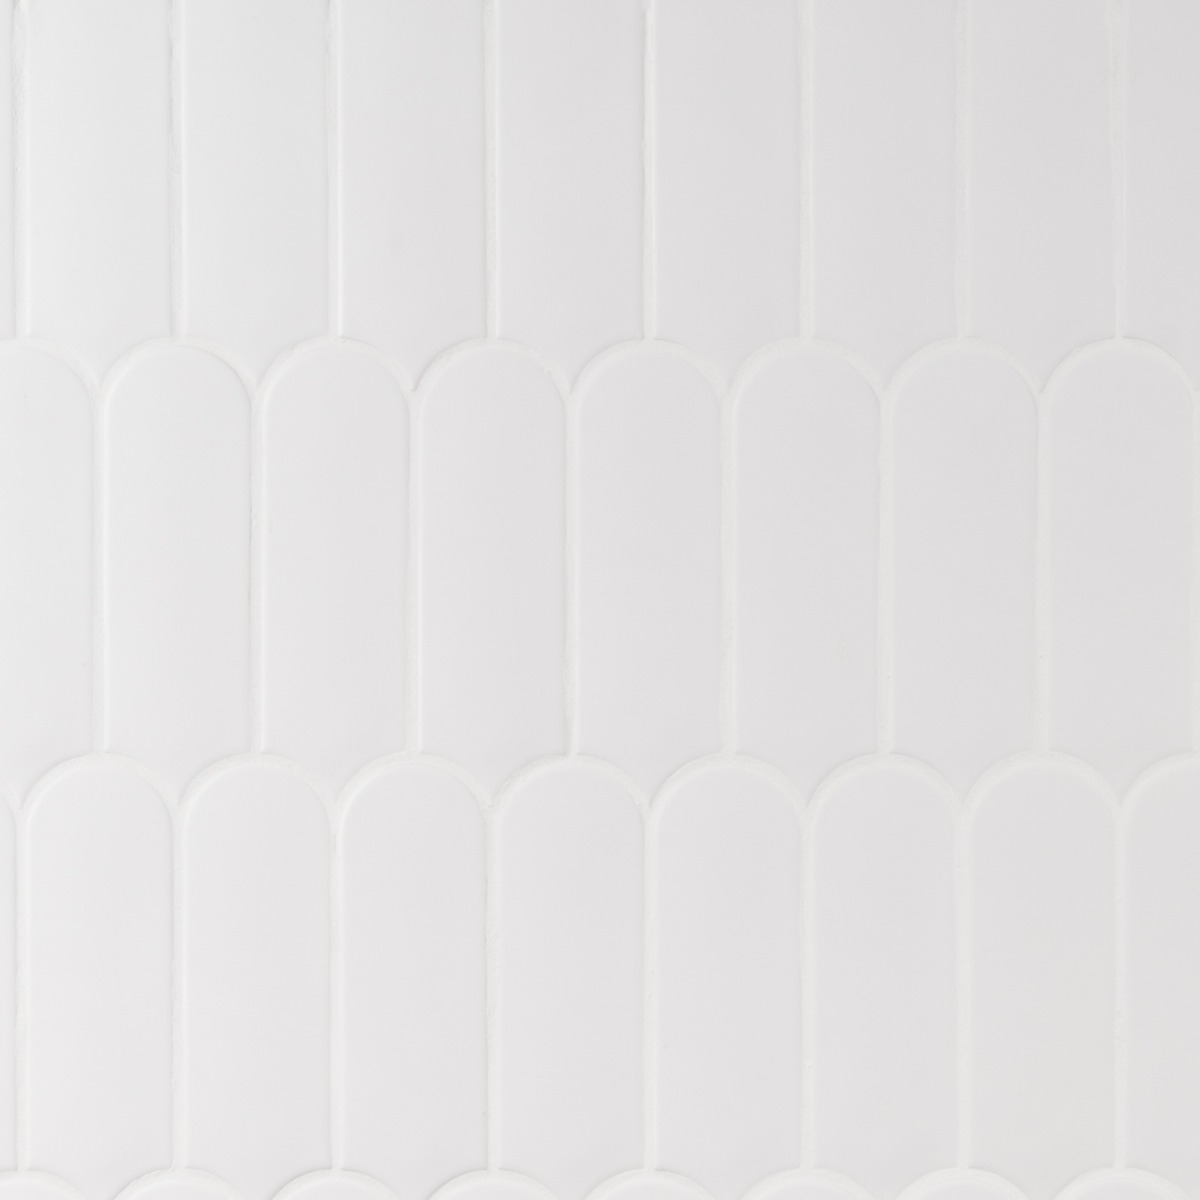 Parry White 3x8 Fishscale Matte Ceramic Wall Tile